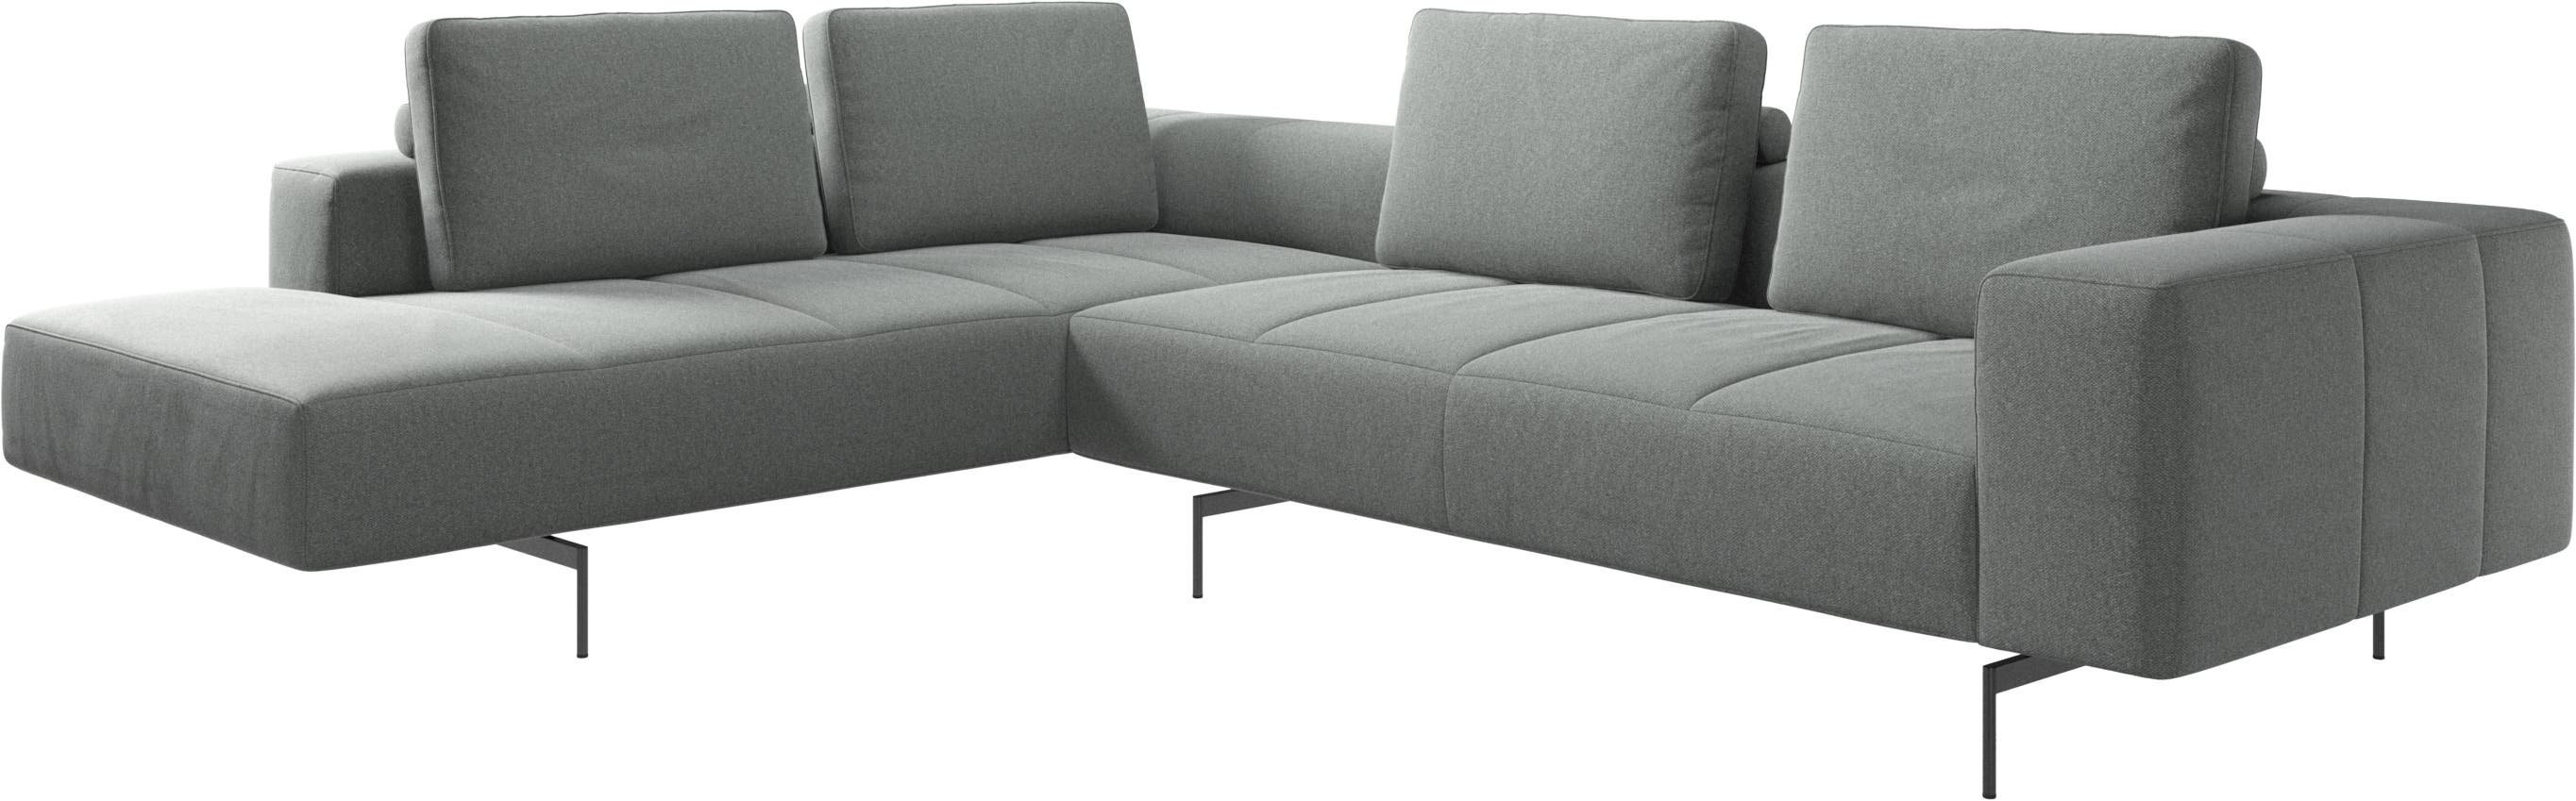 Amsterdam ソファ | デンマークデザインの家具 | ボーコンセプト